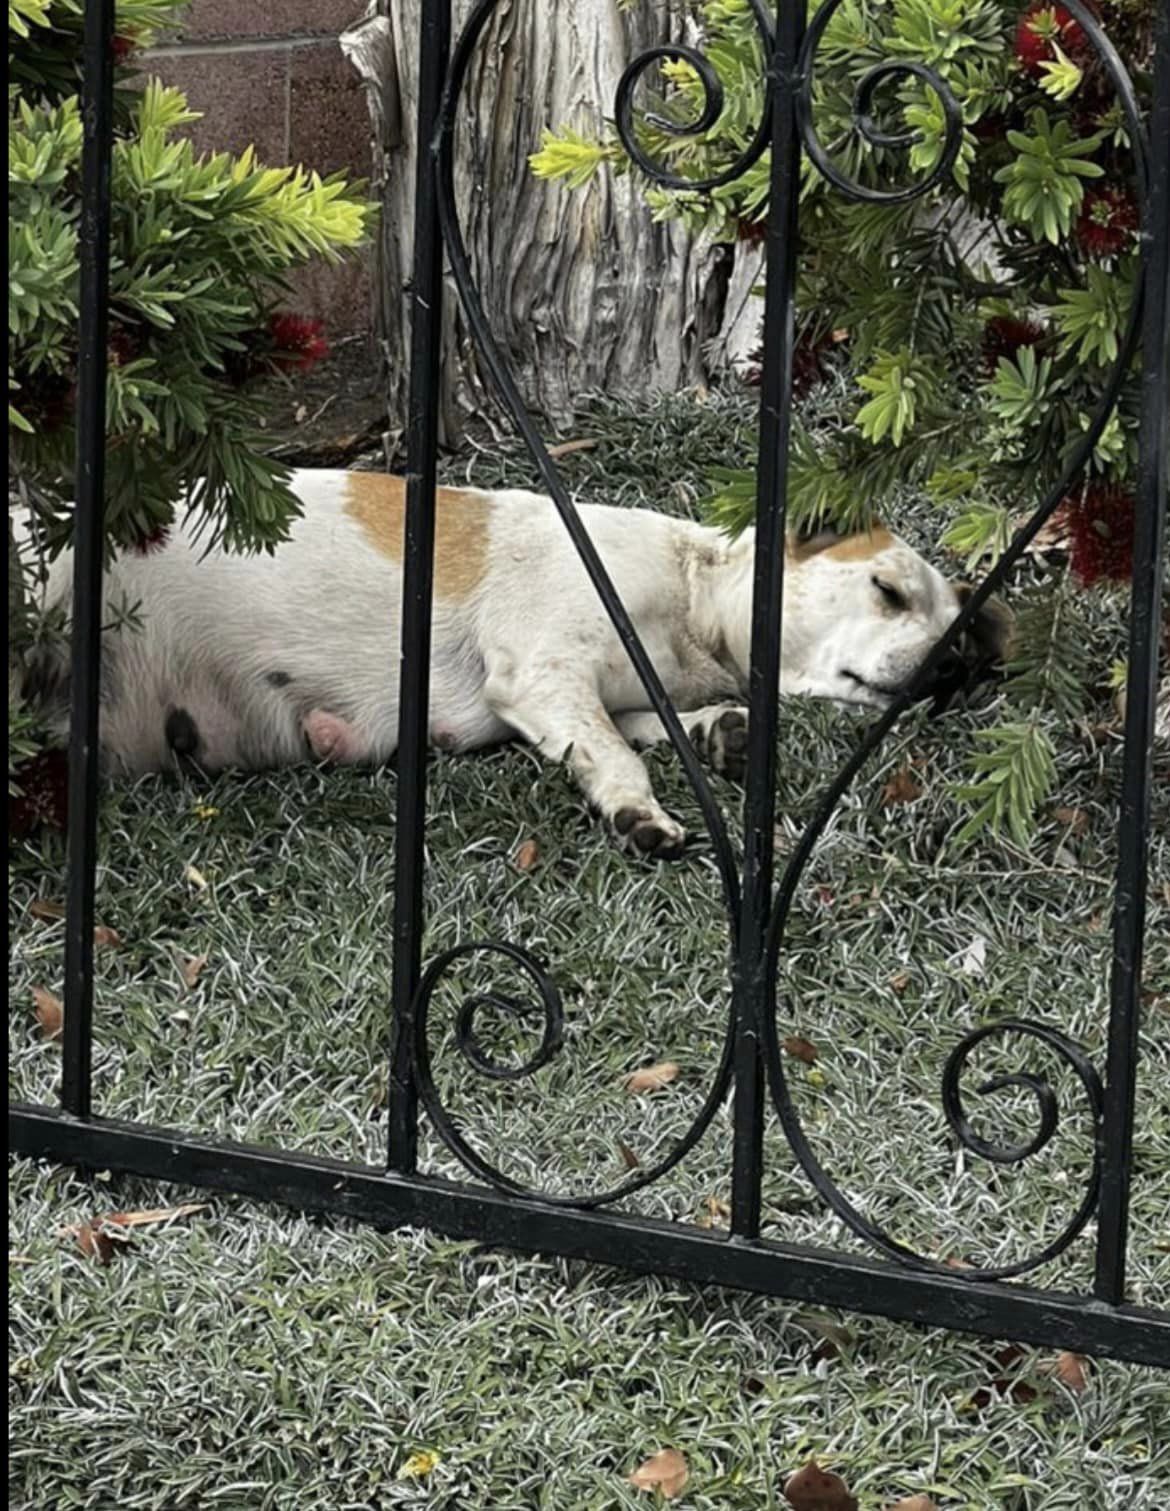 dog sleeping on a grass